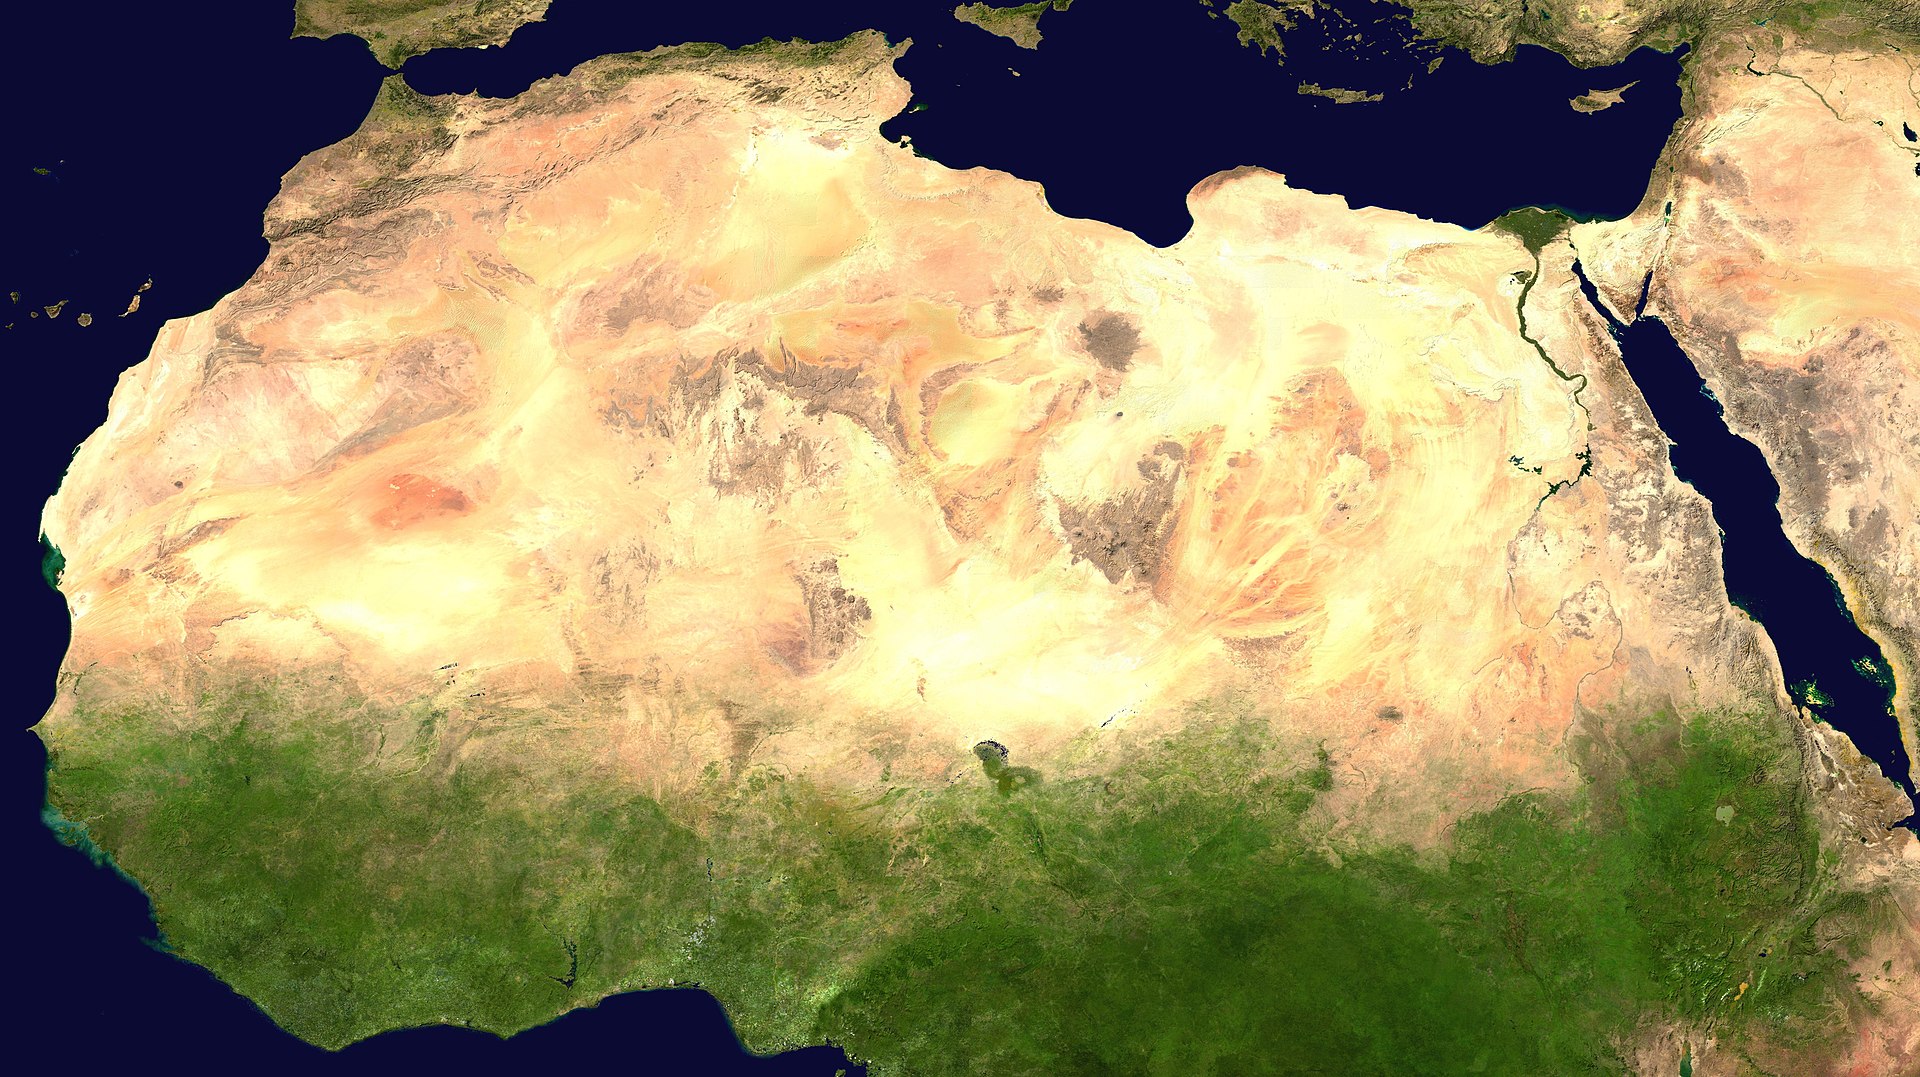 The Sahara Great Green Wall Afrika. Photo by NASA. Public Domain.